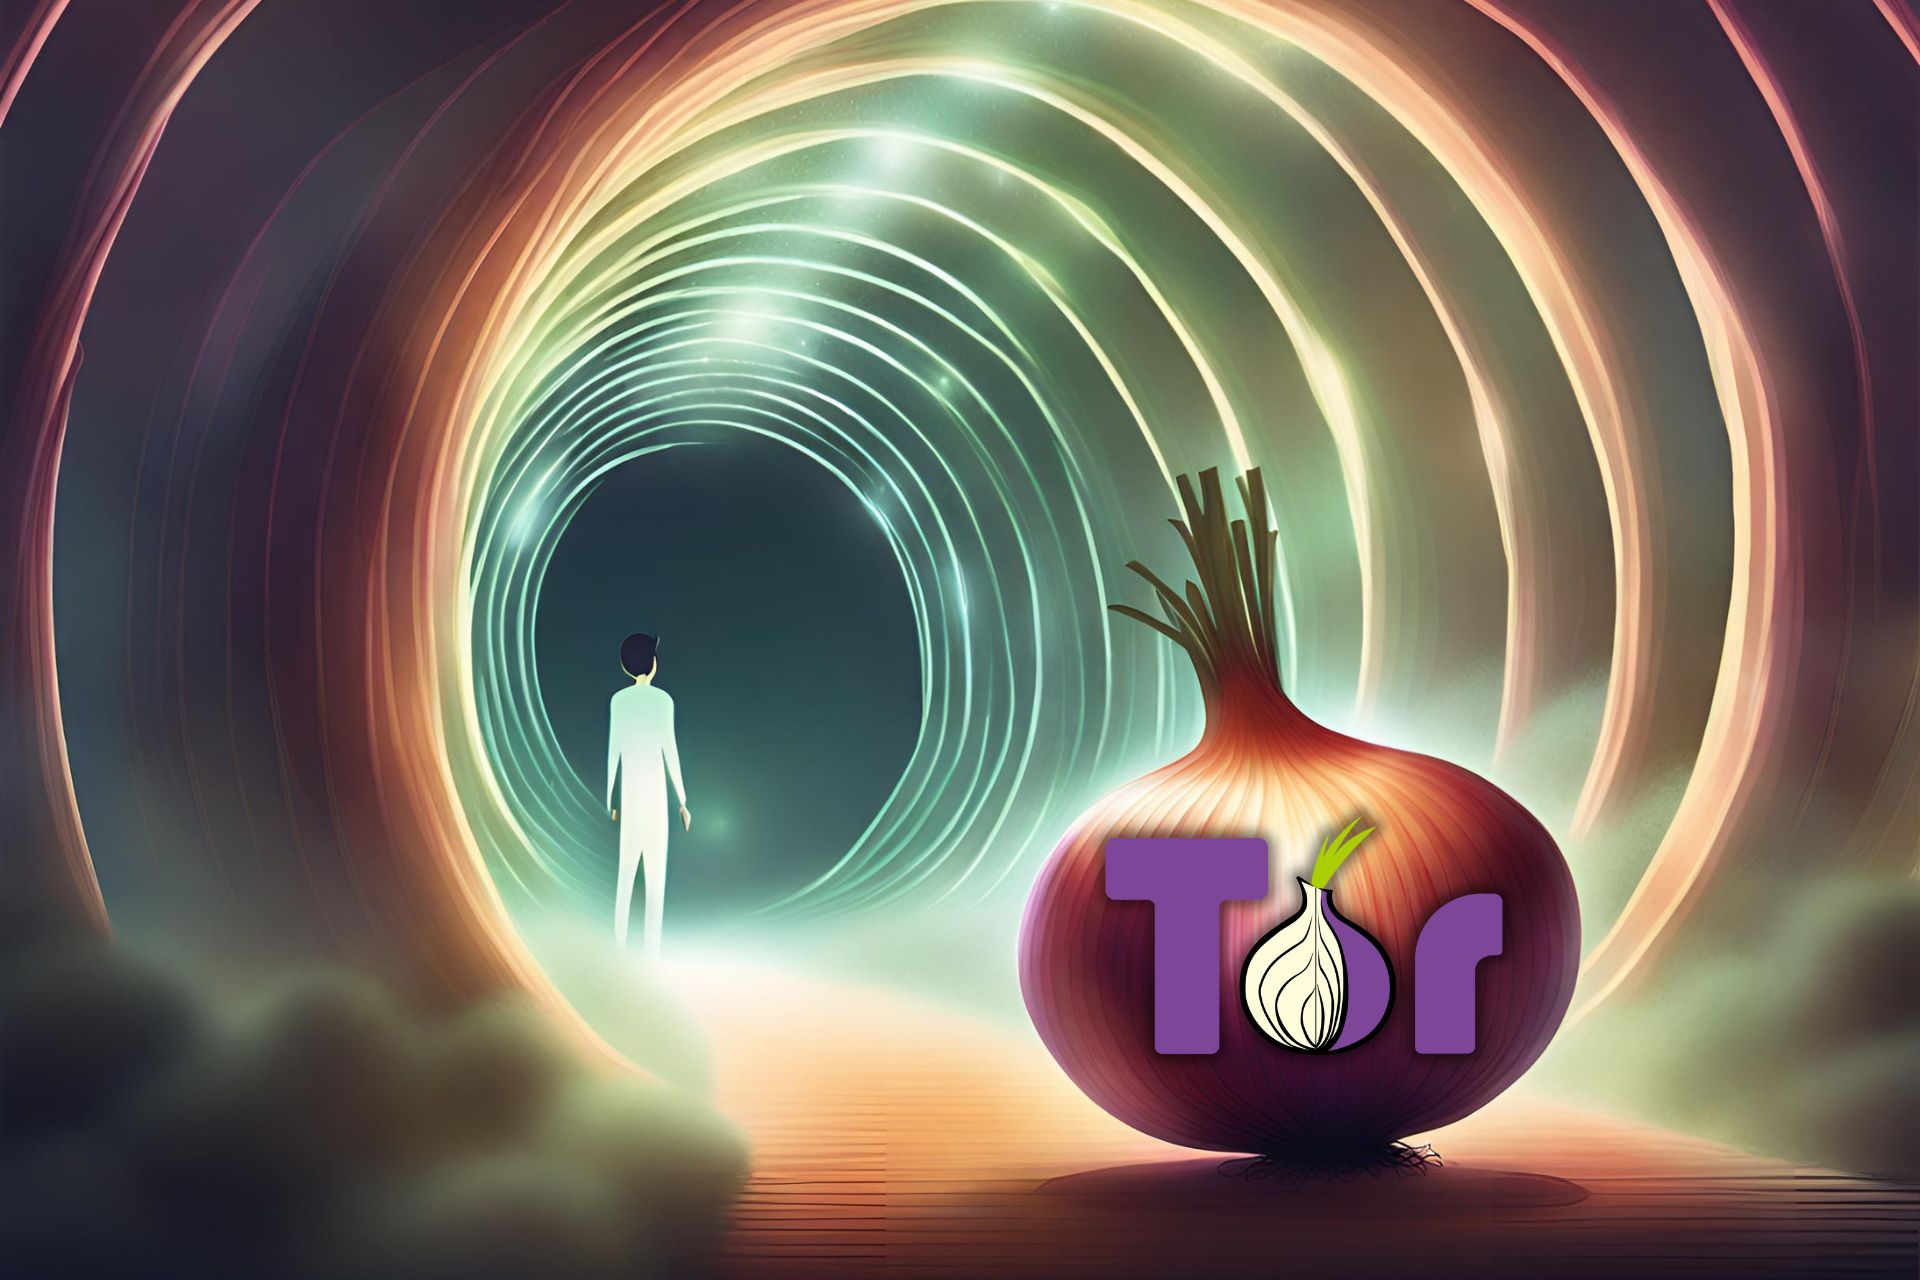 An AI artwork that represents the Tor WebTunnel feature